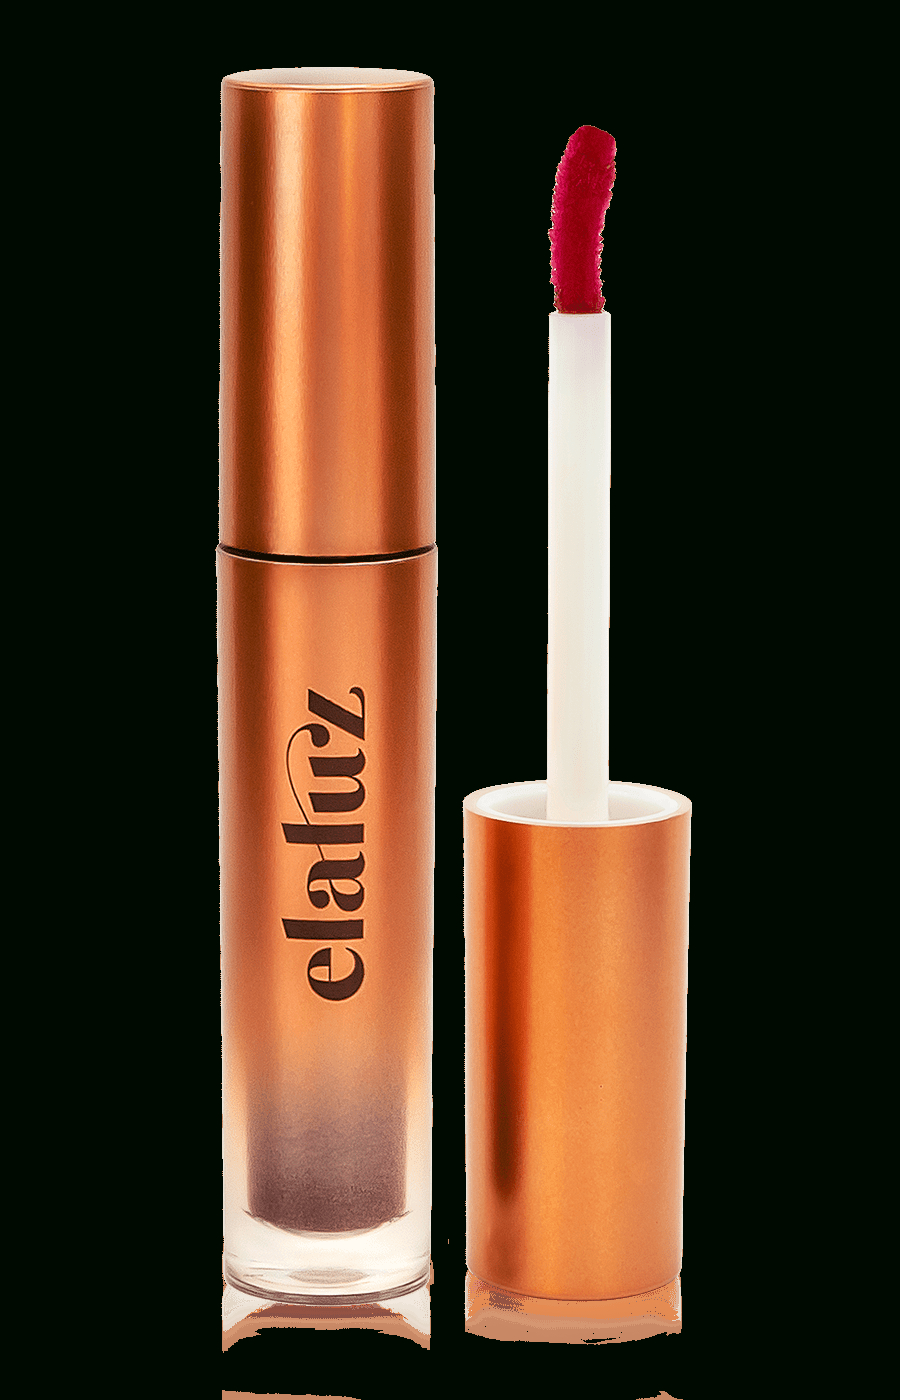 Camila Coelho Launches Mindfully Luxurious Beauty Brand Elaluz concernant Elaluz Beauty Oil 